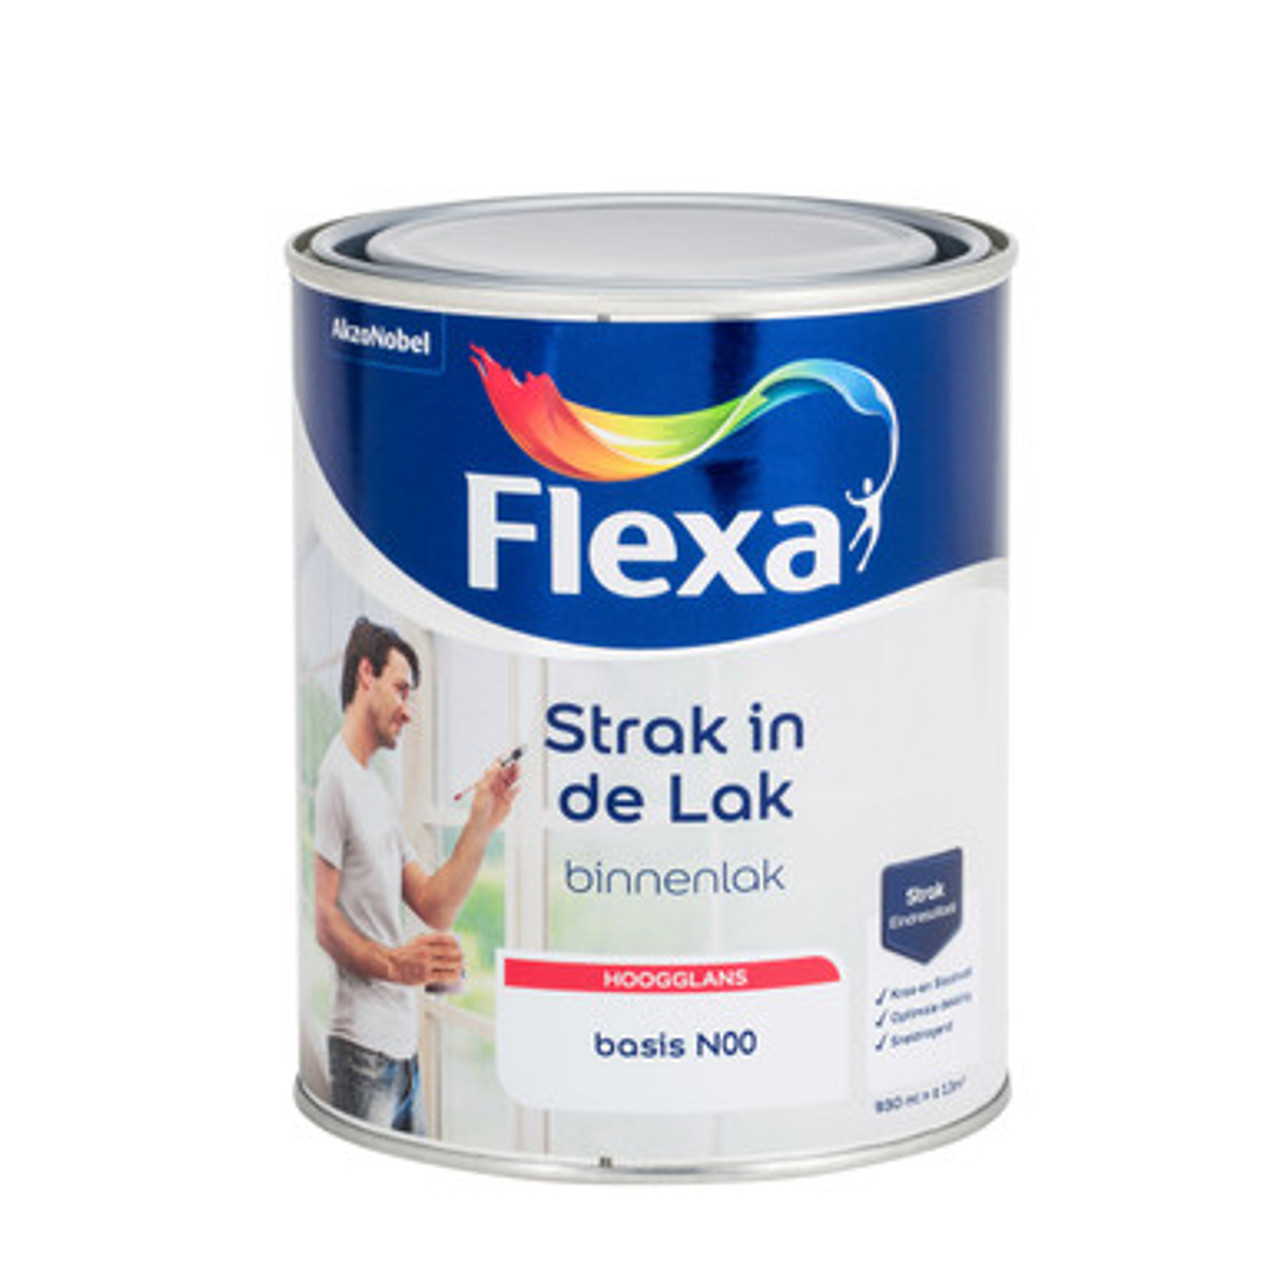 Flexa Strak in de Lak Binnenlak Hoogglans Onlineverf.nl